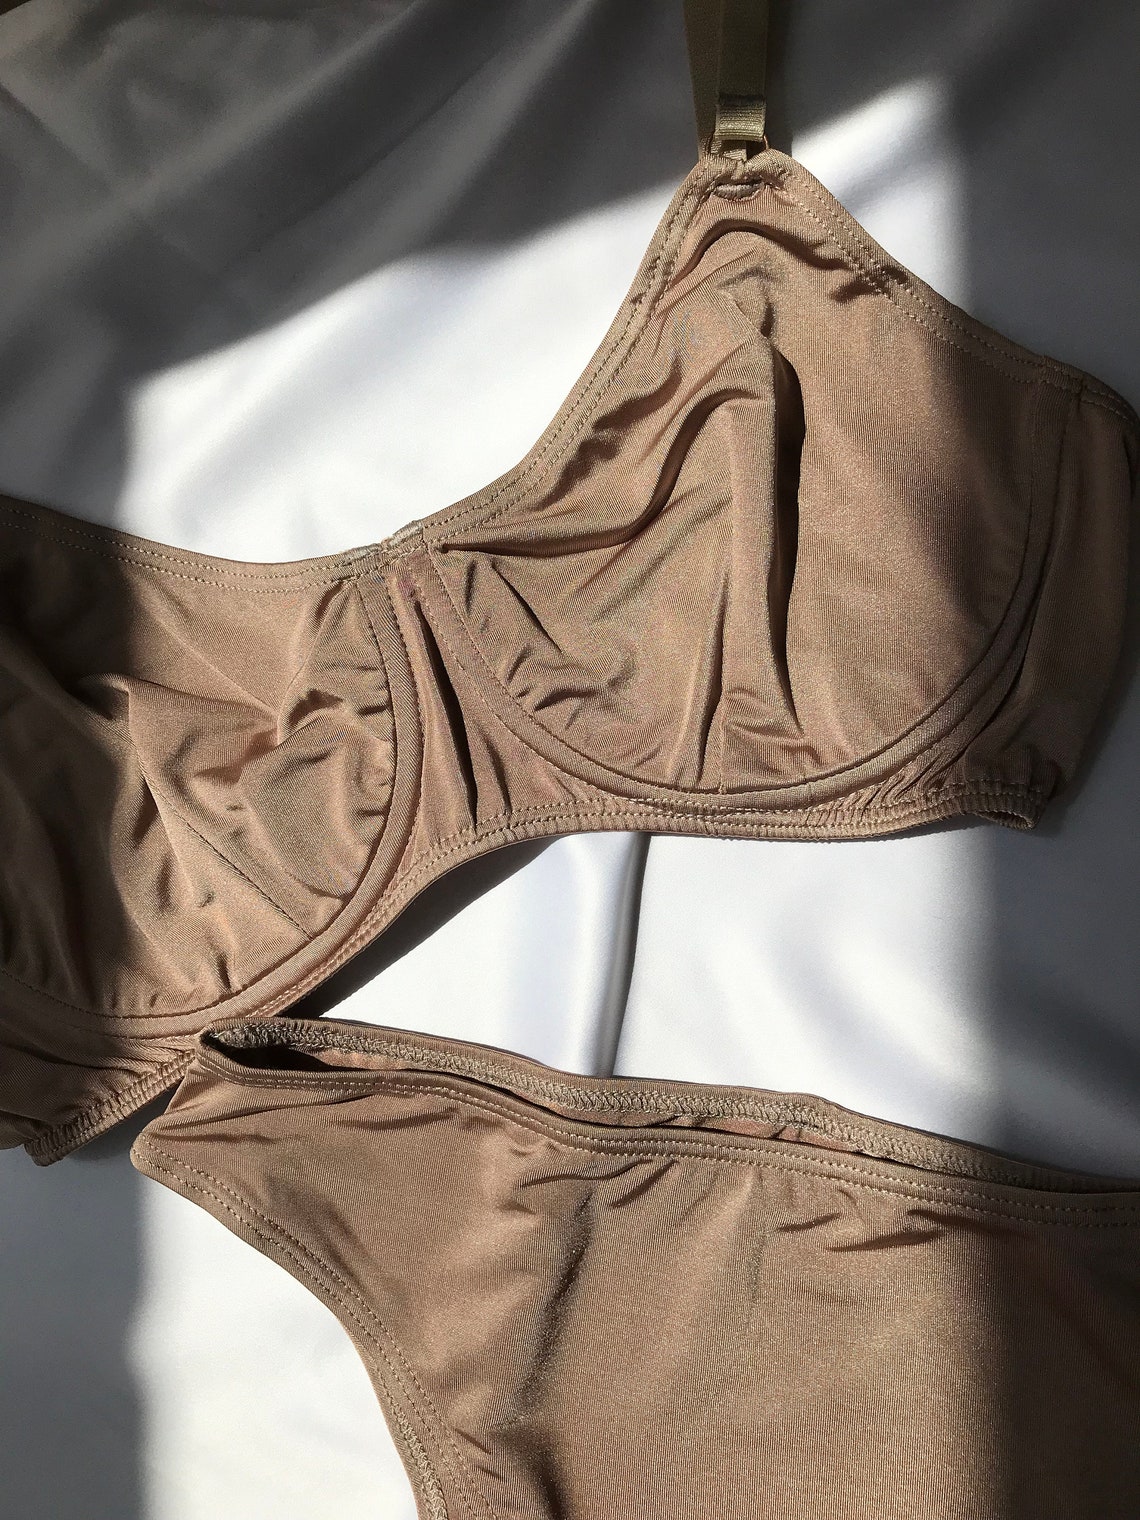 Basic Nude Lingerie Set / Everyday Underwear Women / High Rise | Etsy